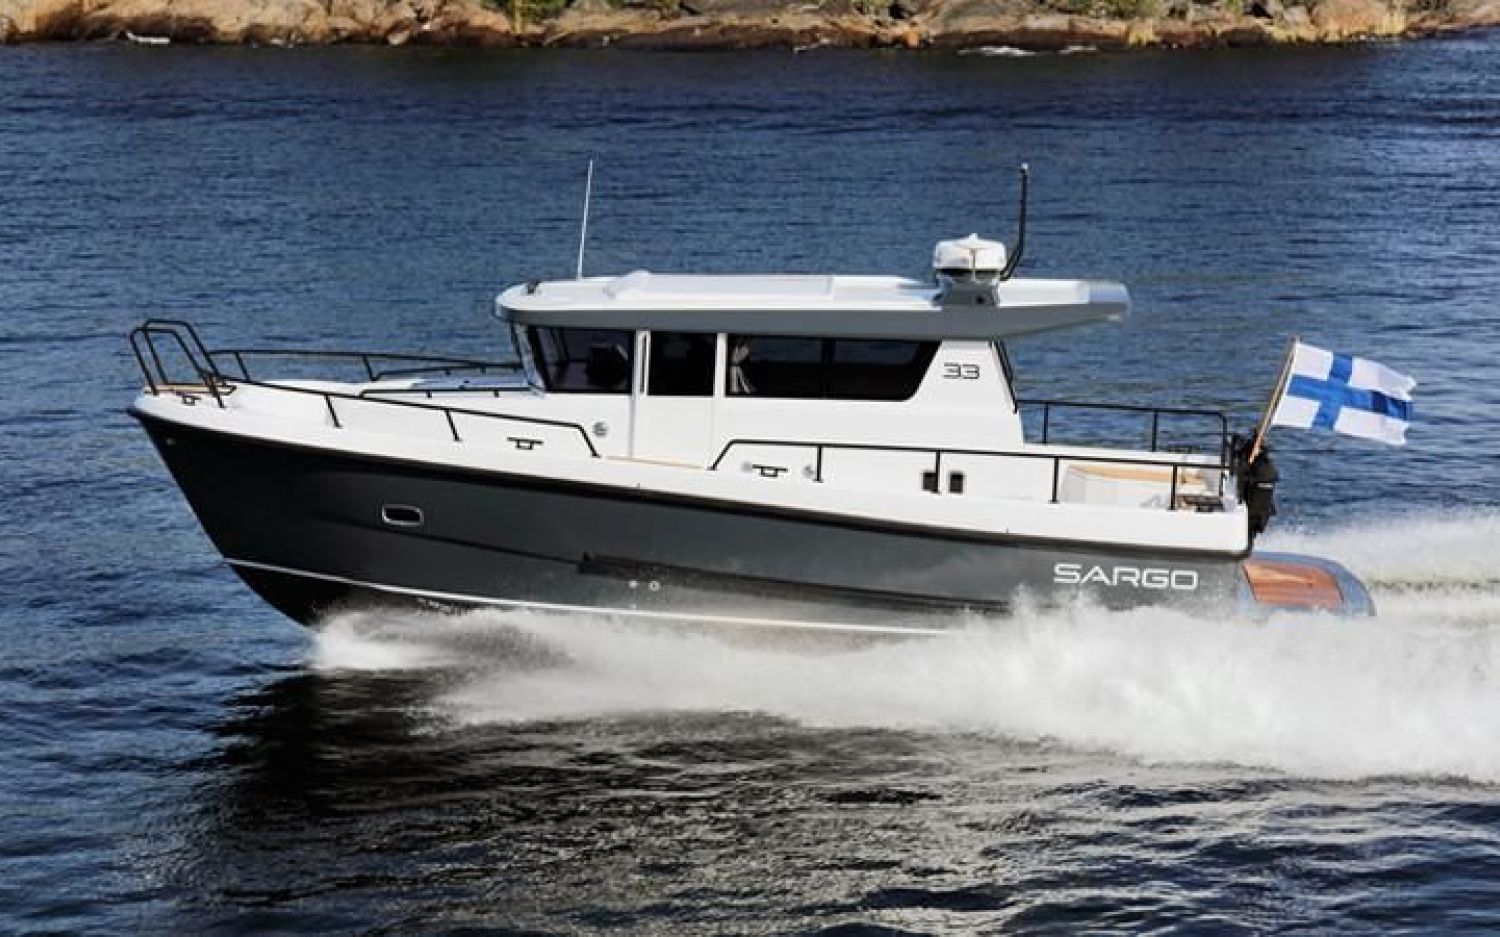 Sargo 33 Explorer, Motor Yacht for sale by HollandBoat International Yachtbrokers